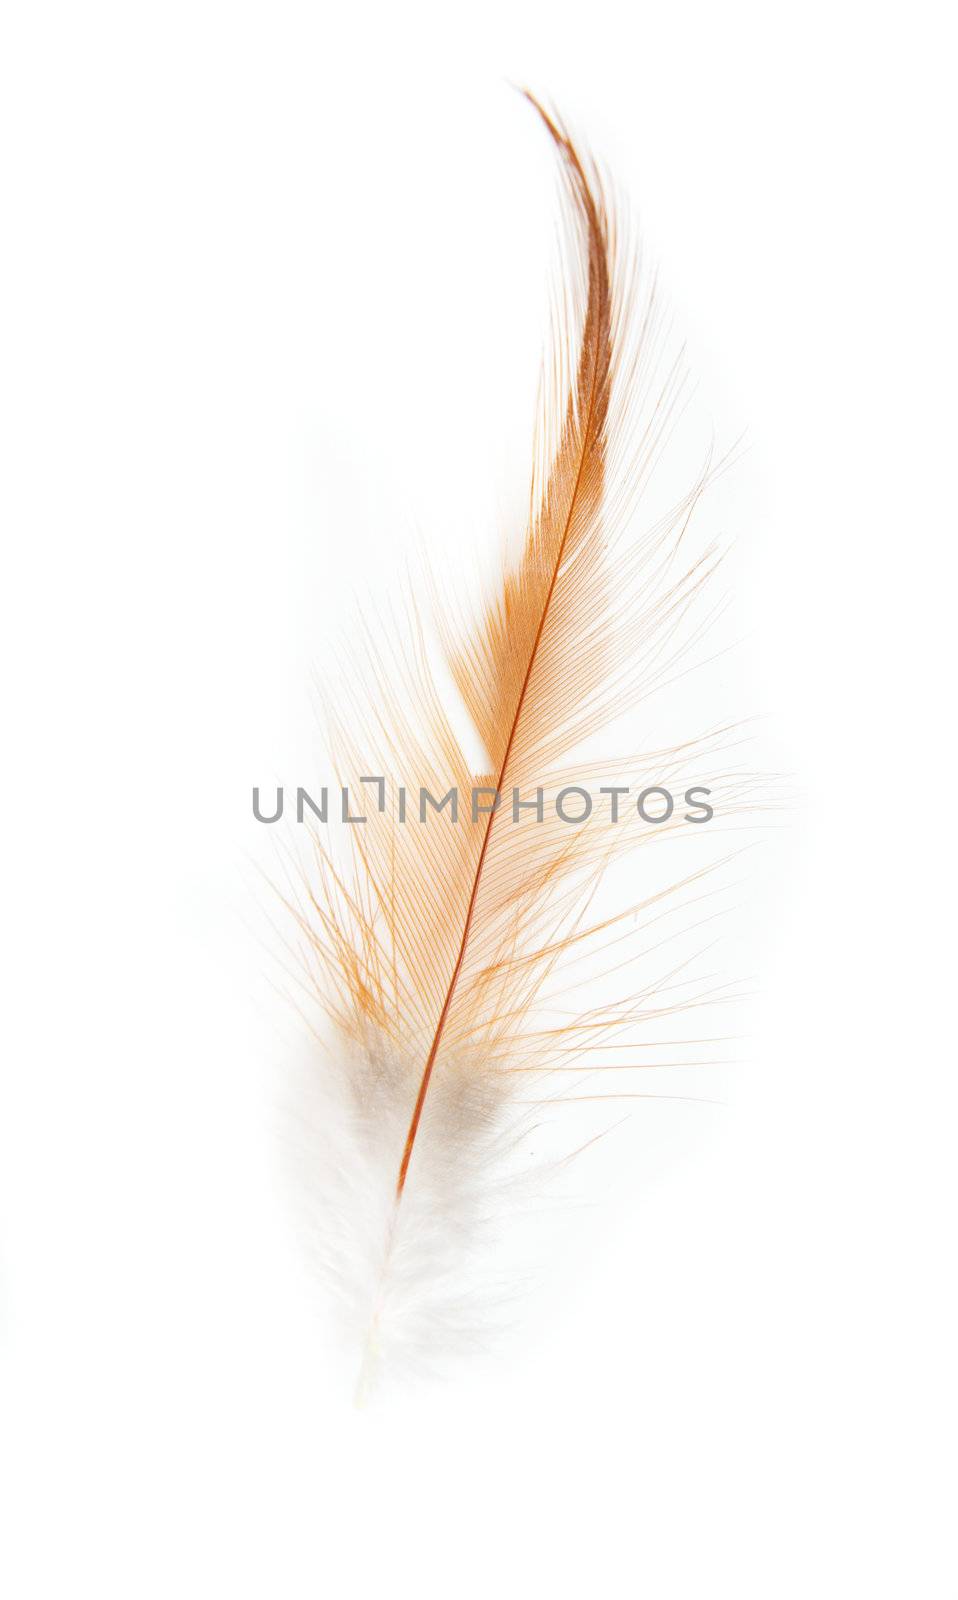 orange feathers on a white background